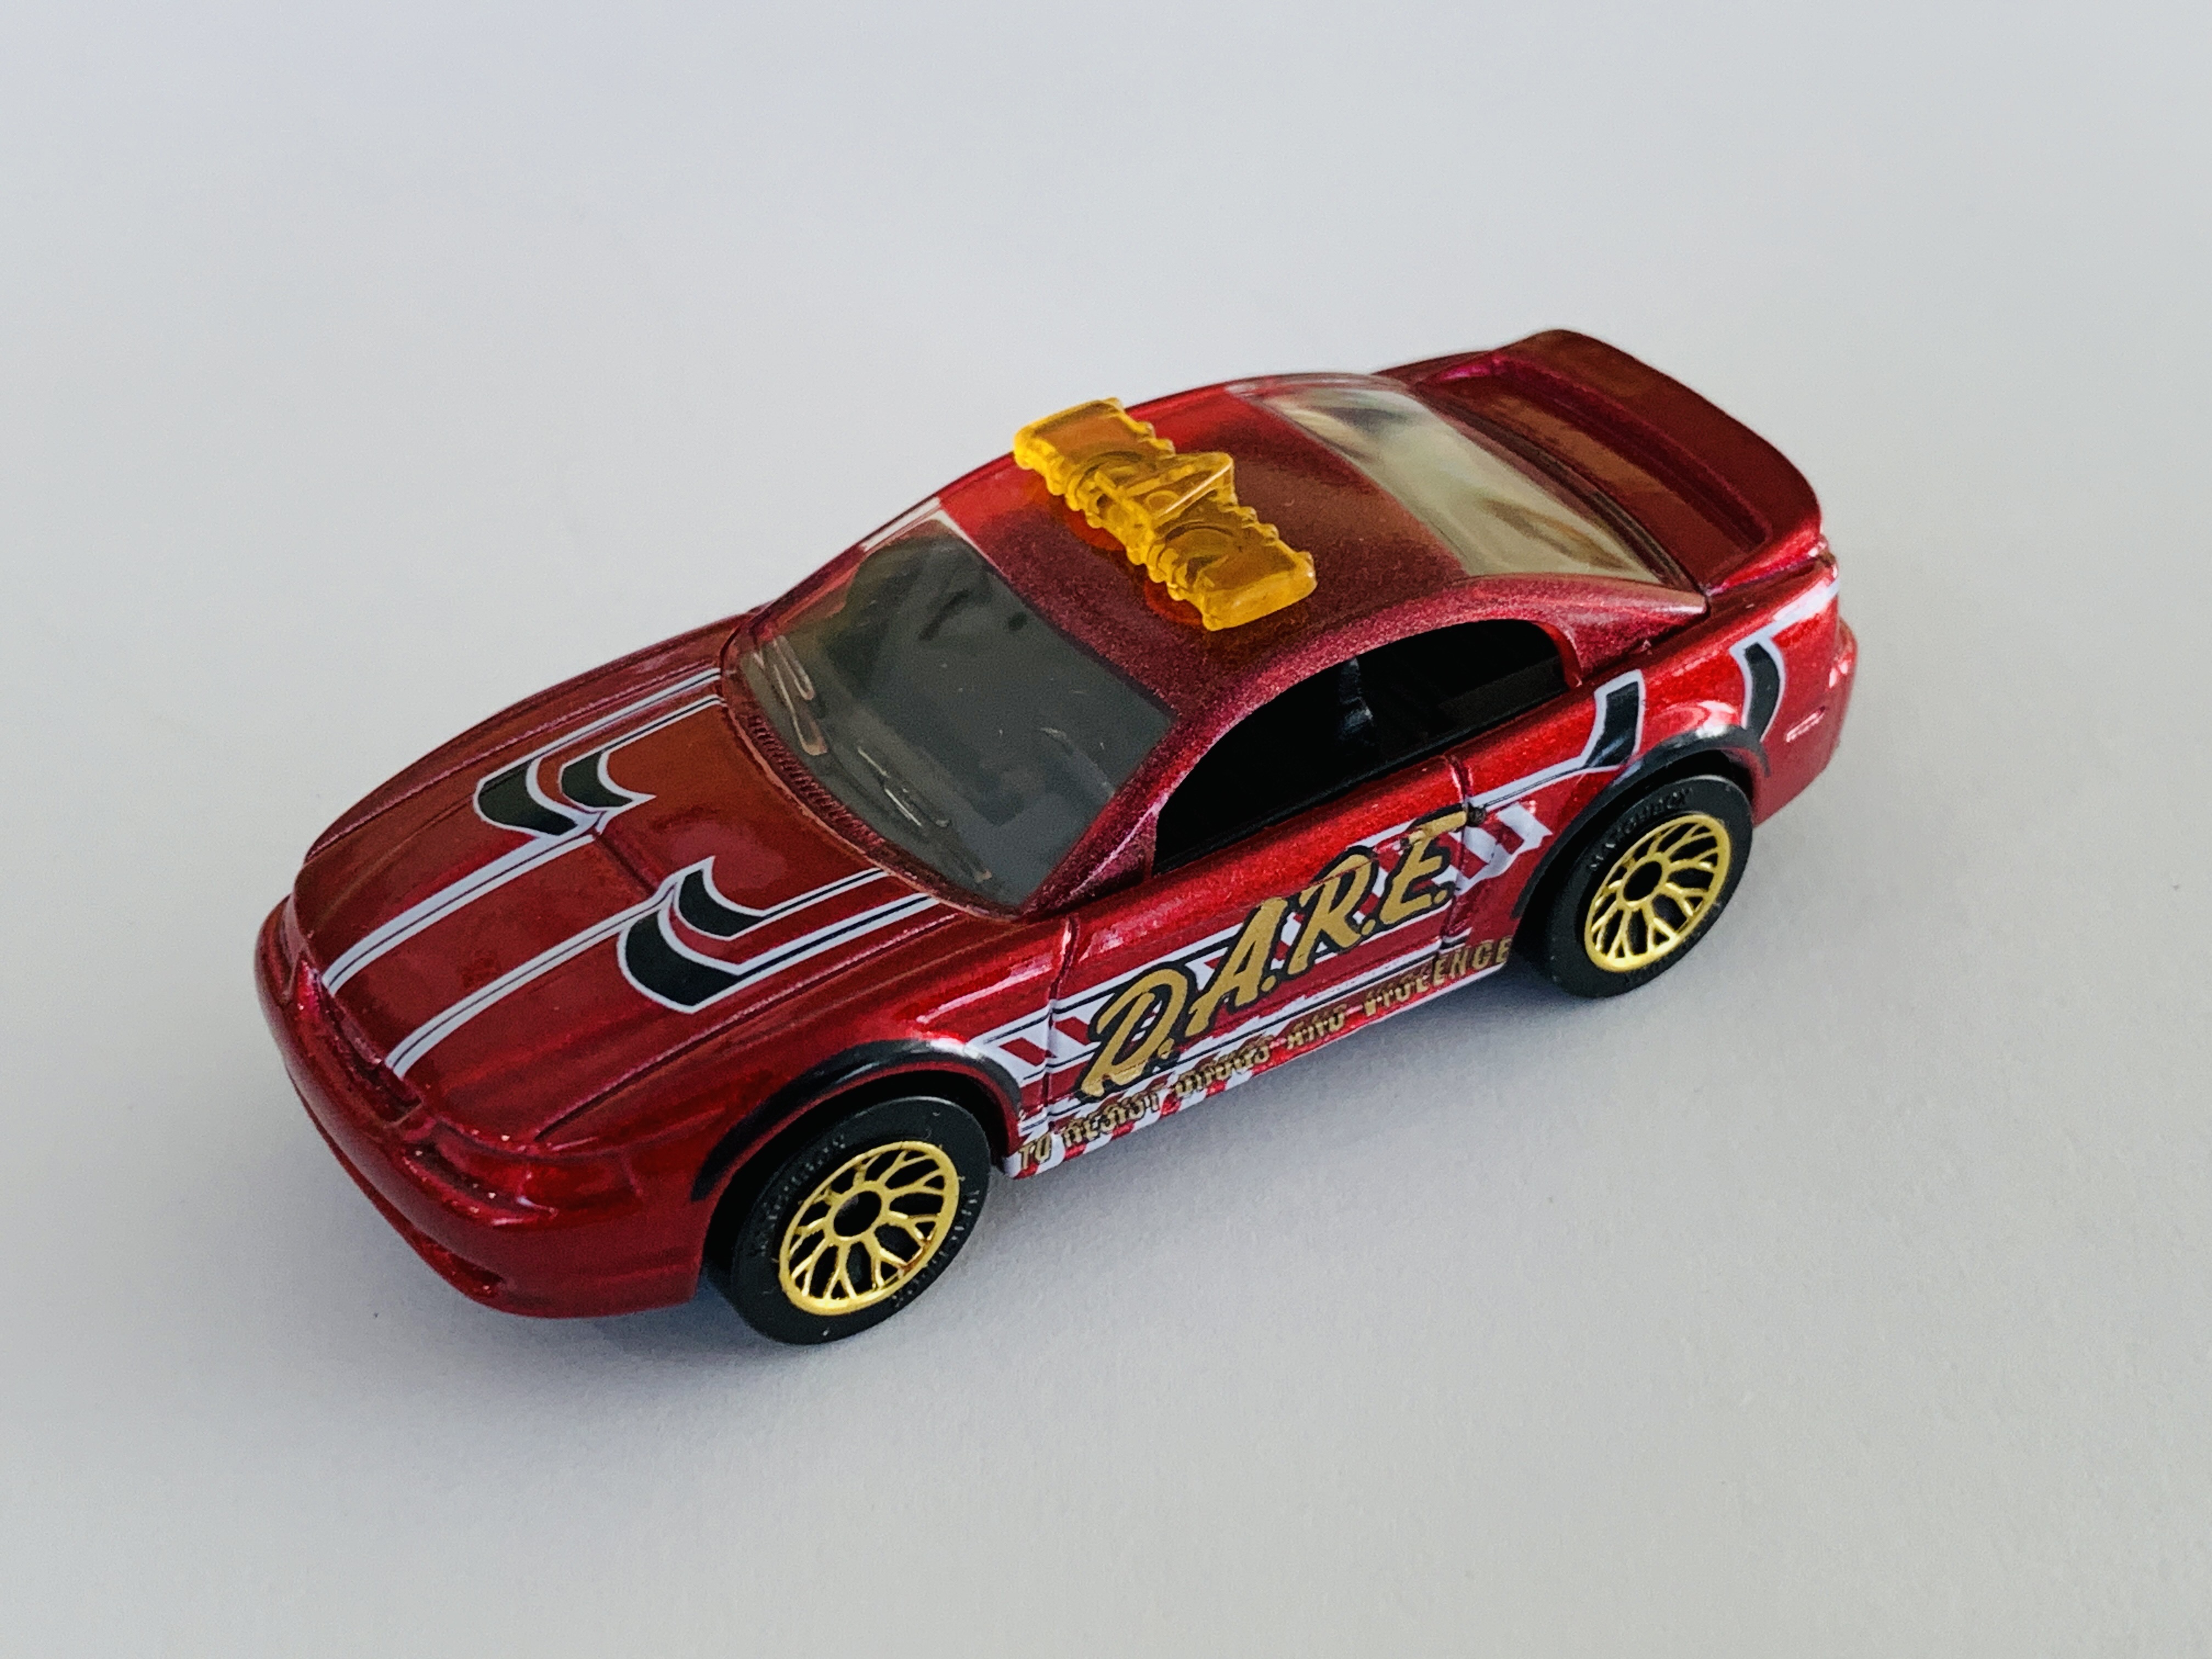 Matchbox DARE '99 Mustang